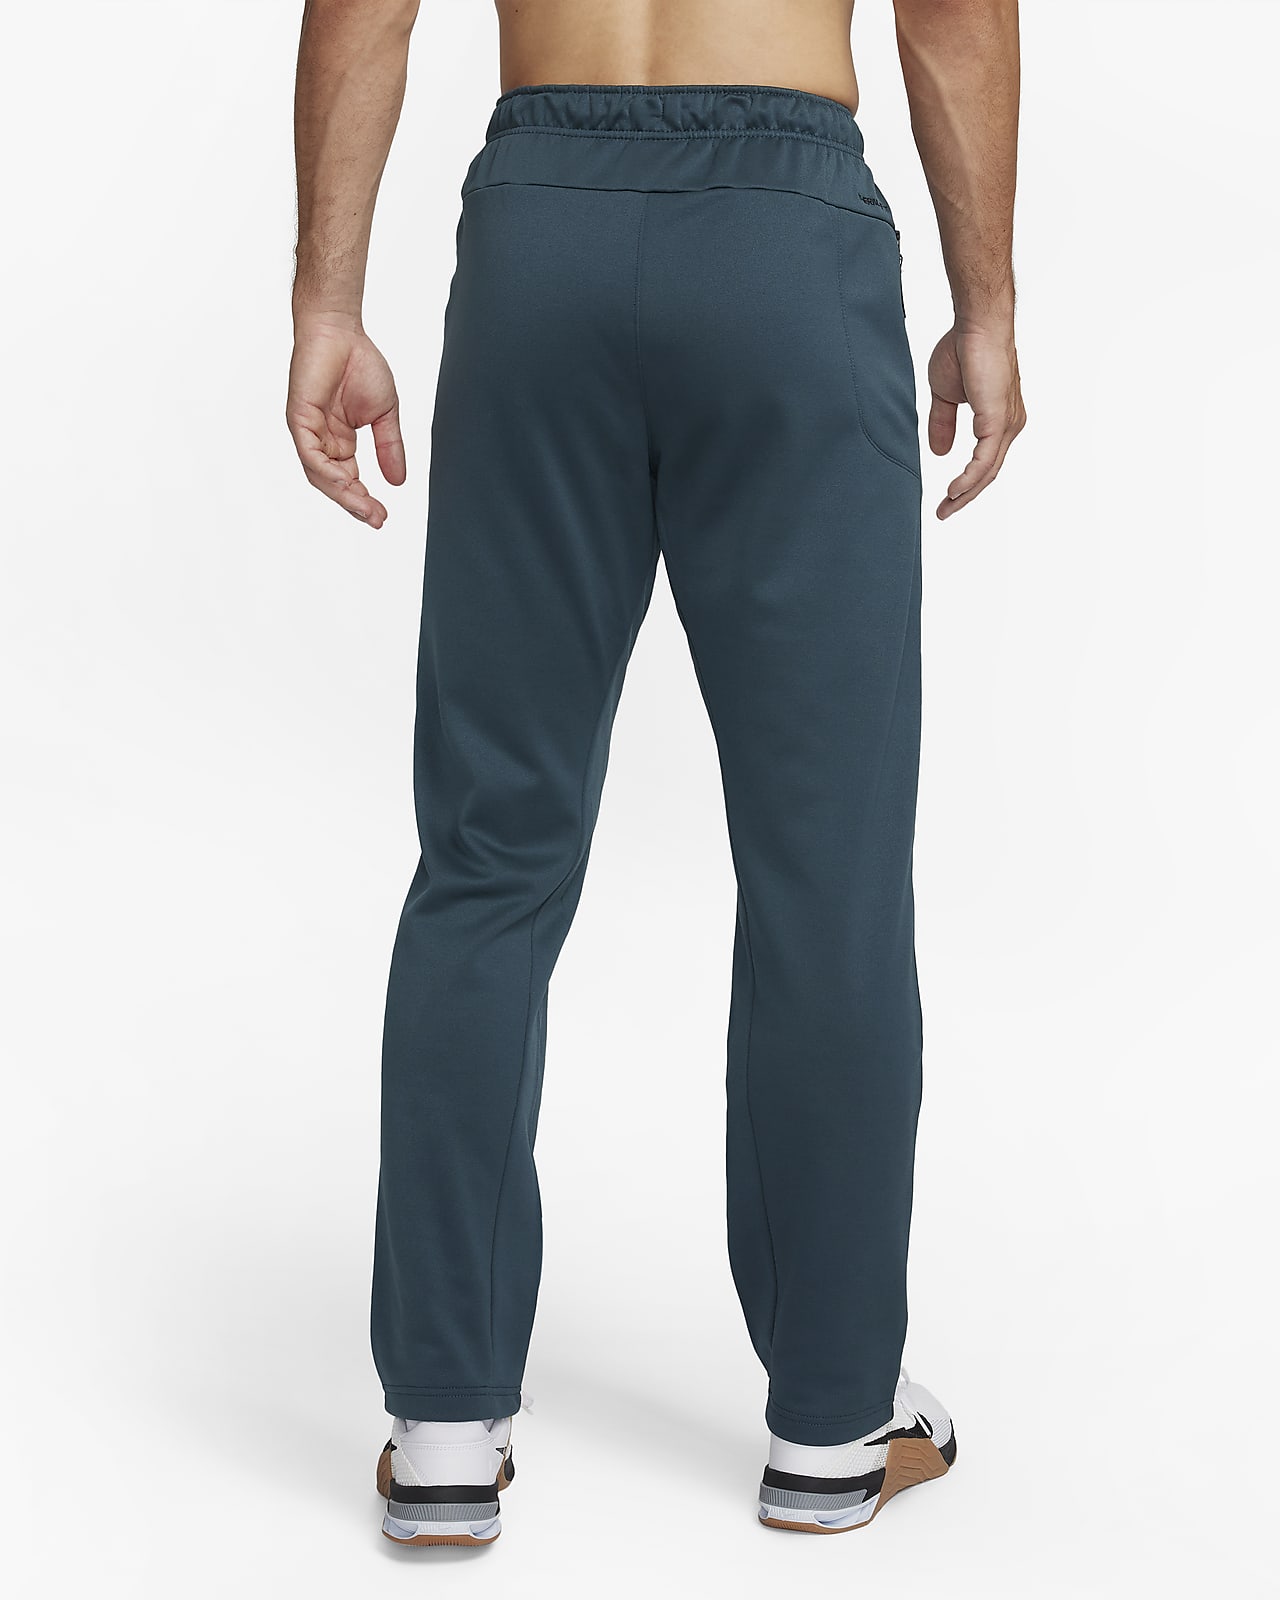 Nike Therma-Fit Sweatpants Mens Sz M Gray Open Hem Epic Fitness Pants  Stretch